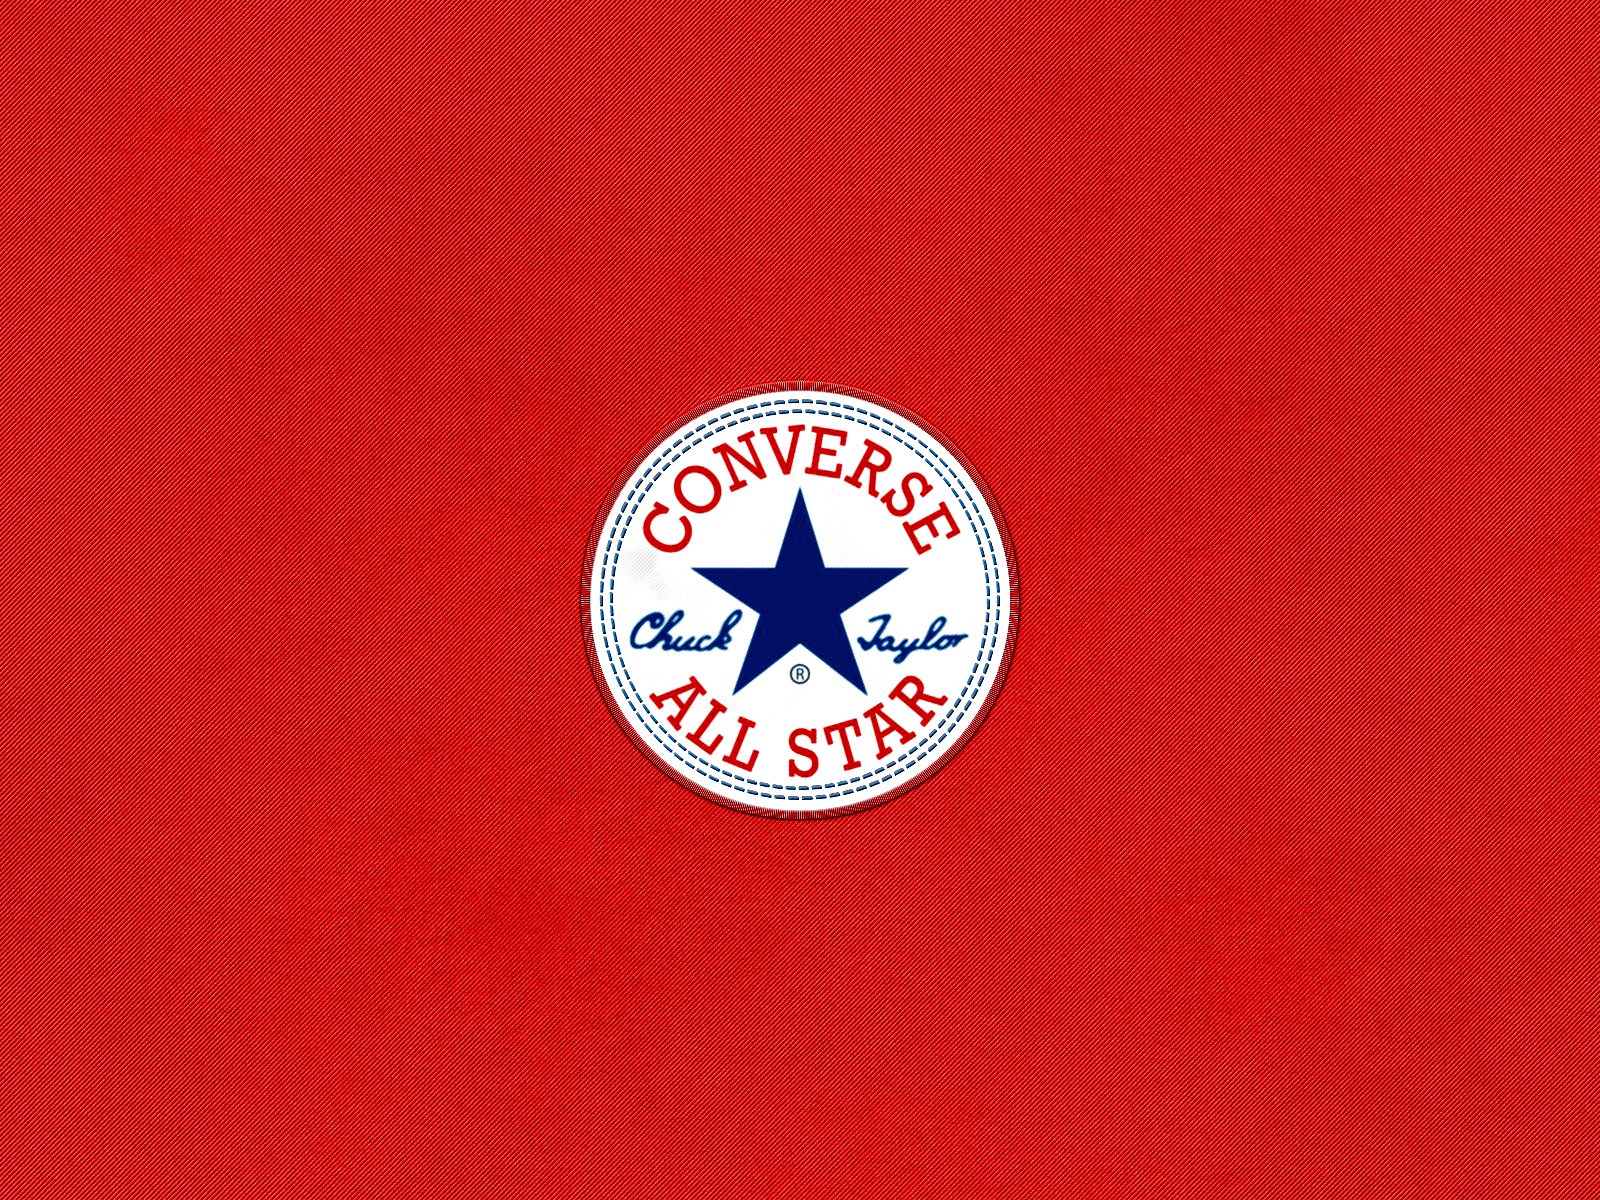 Converse All Star Wallpaper On